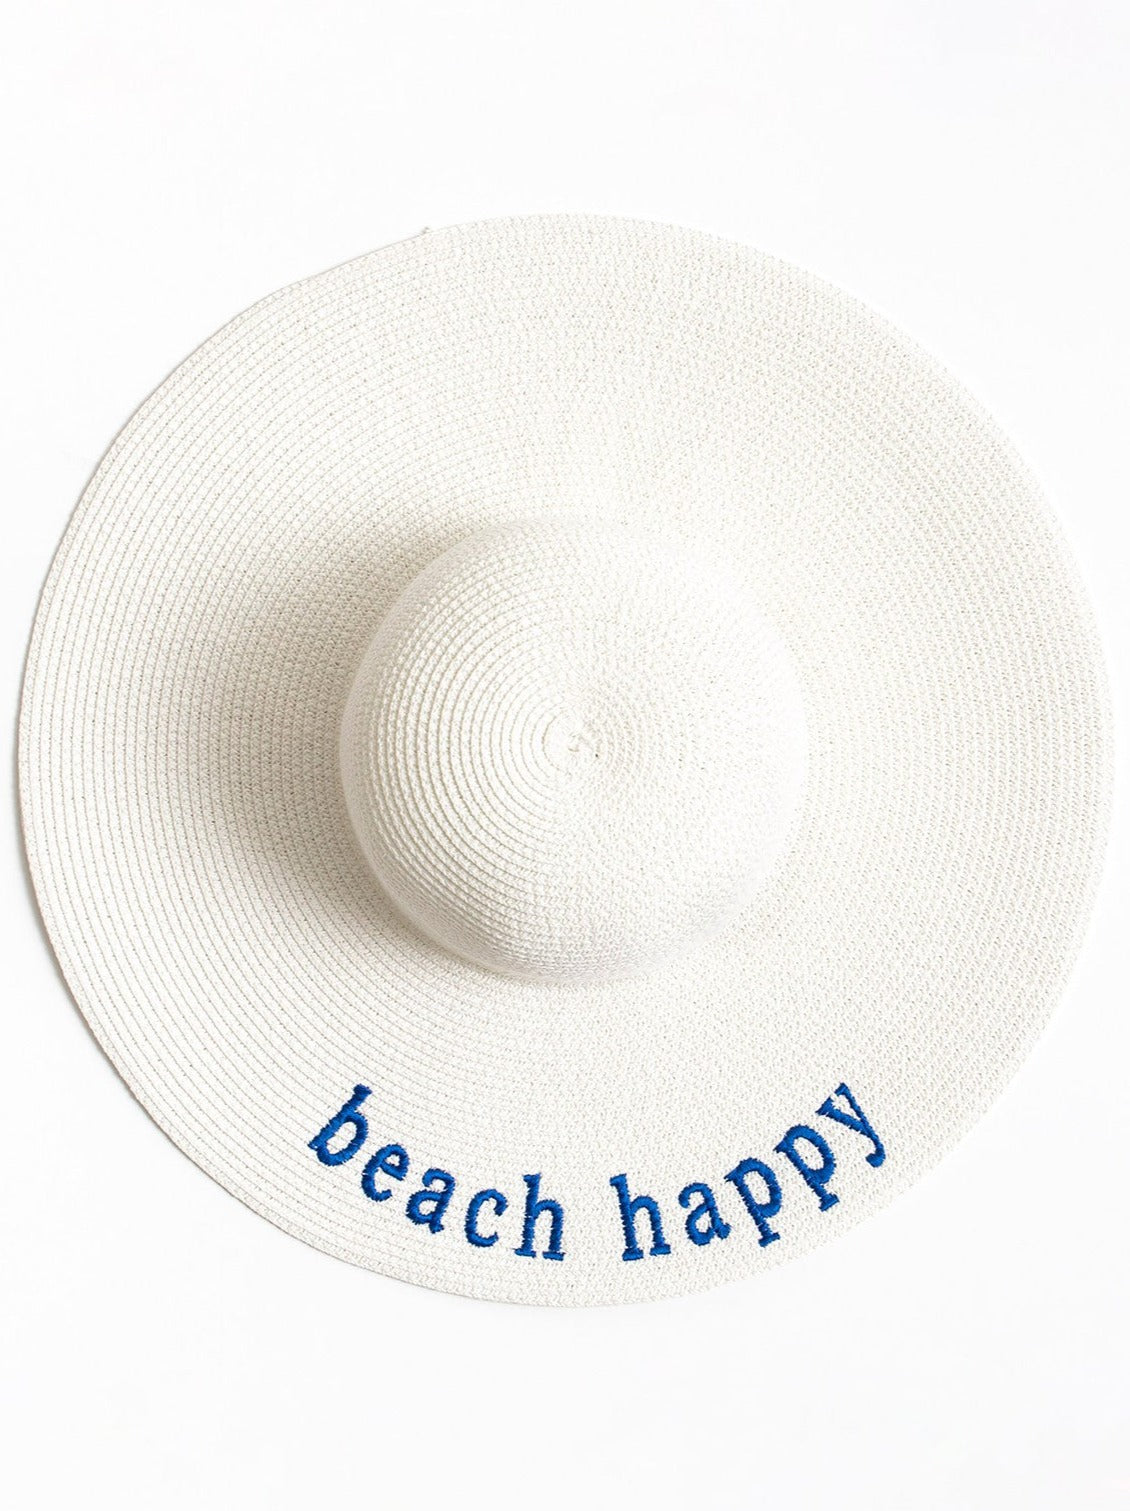 Beach Happy Floppy Hat